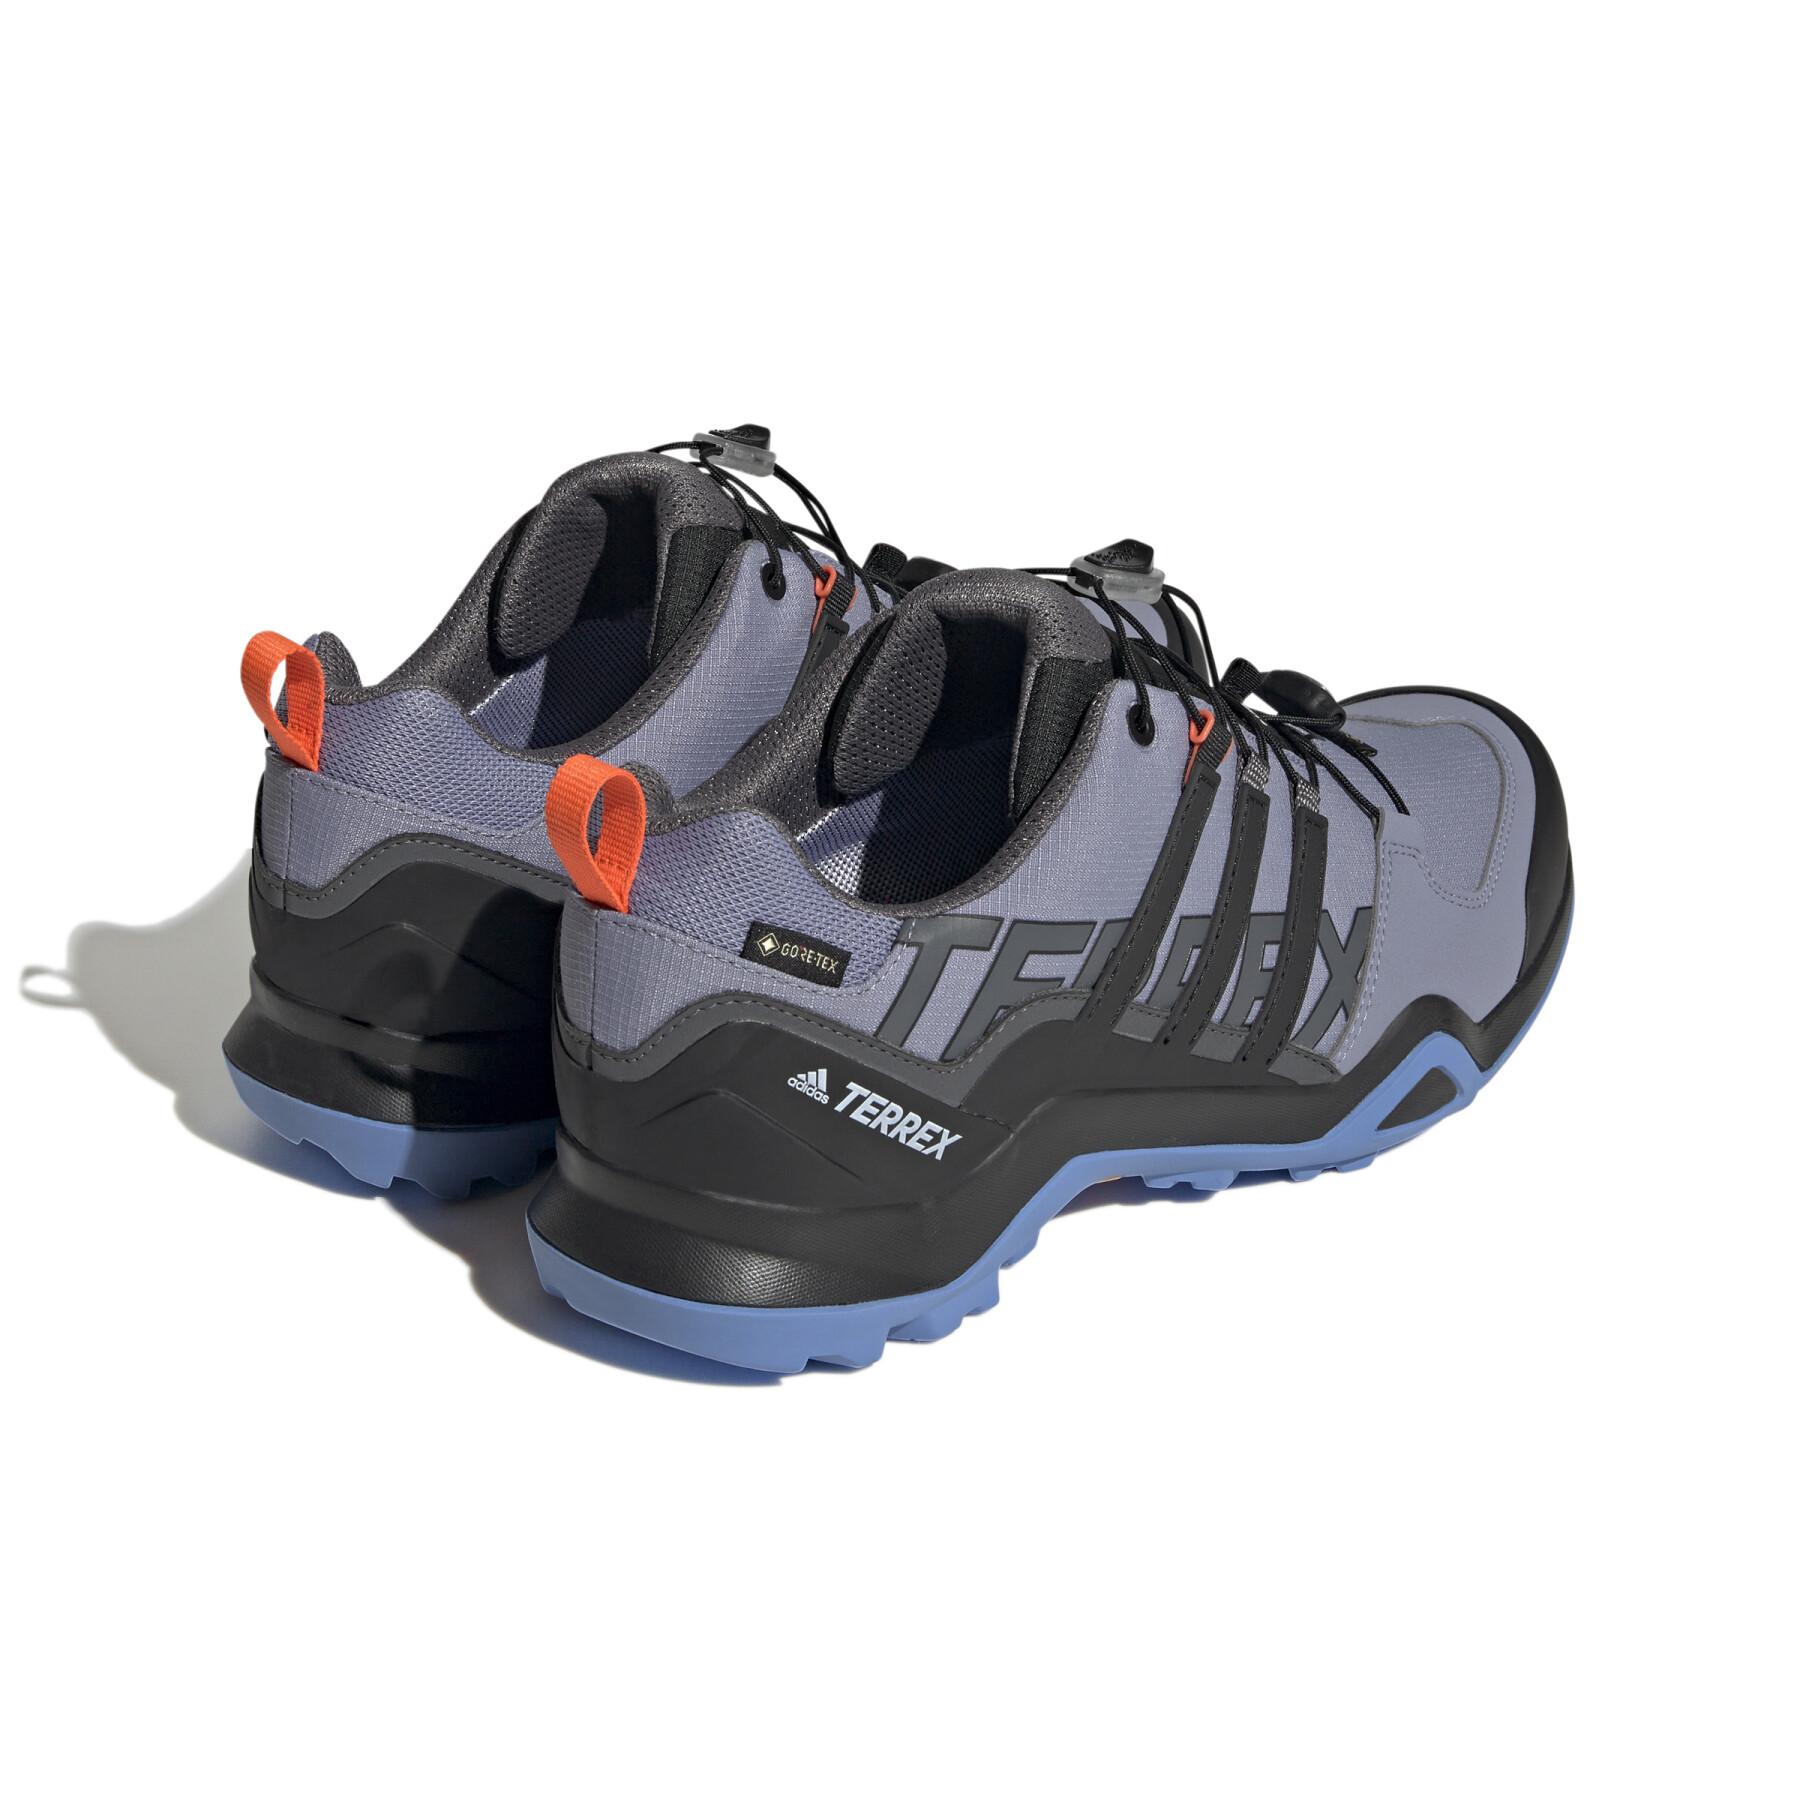 Hiking shoes adidas Terrex Swift R2 GTX